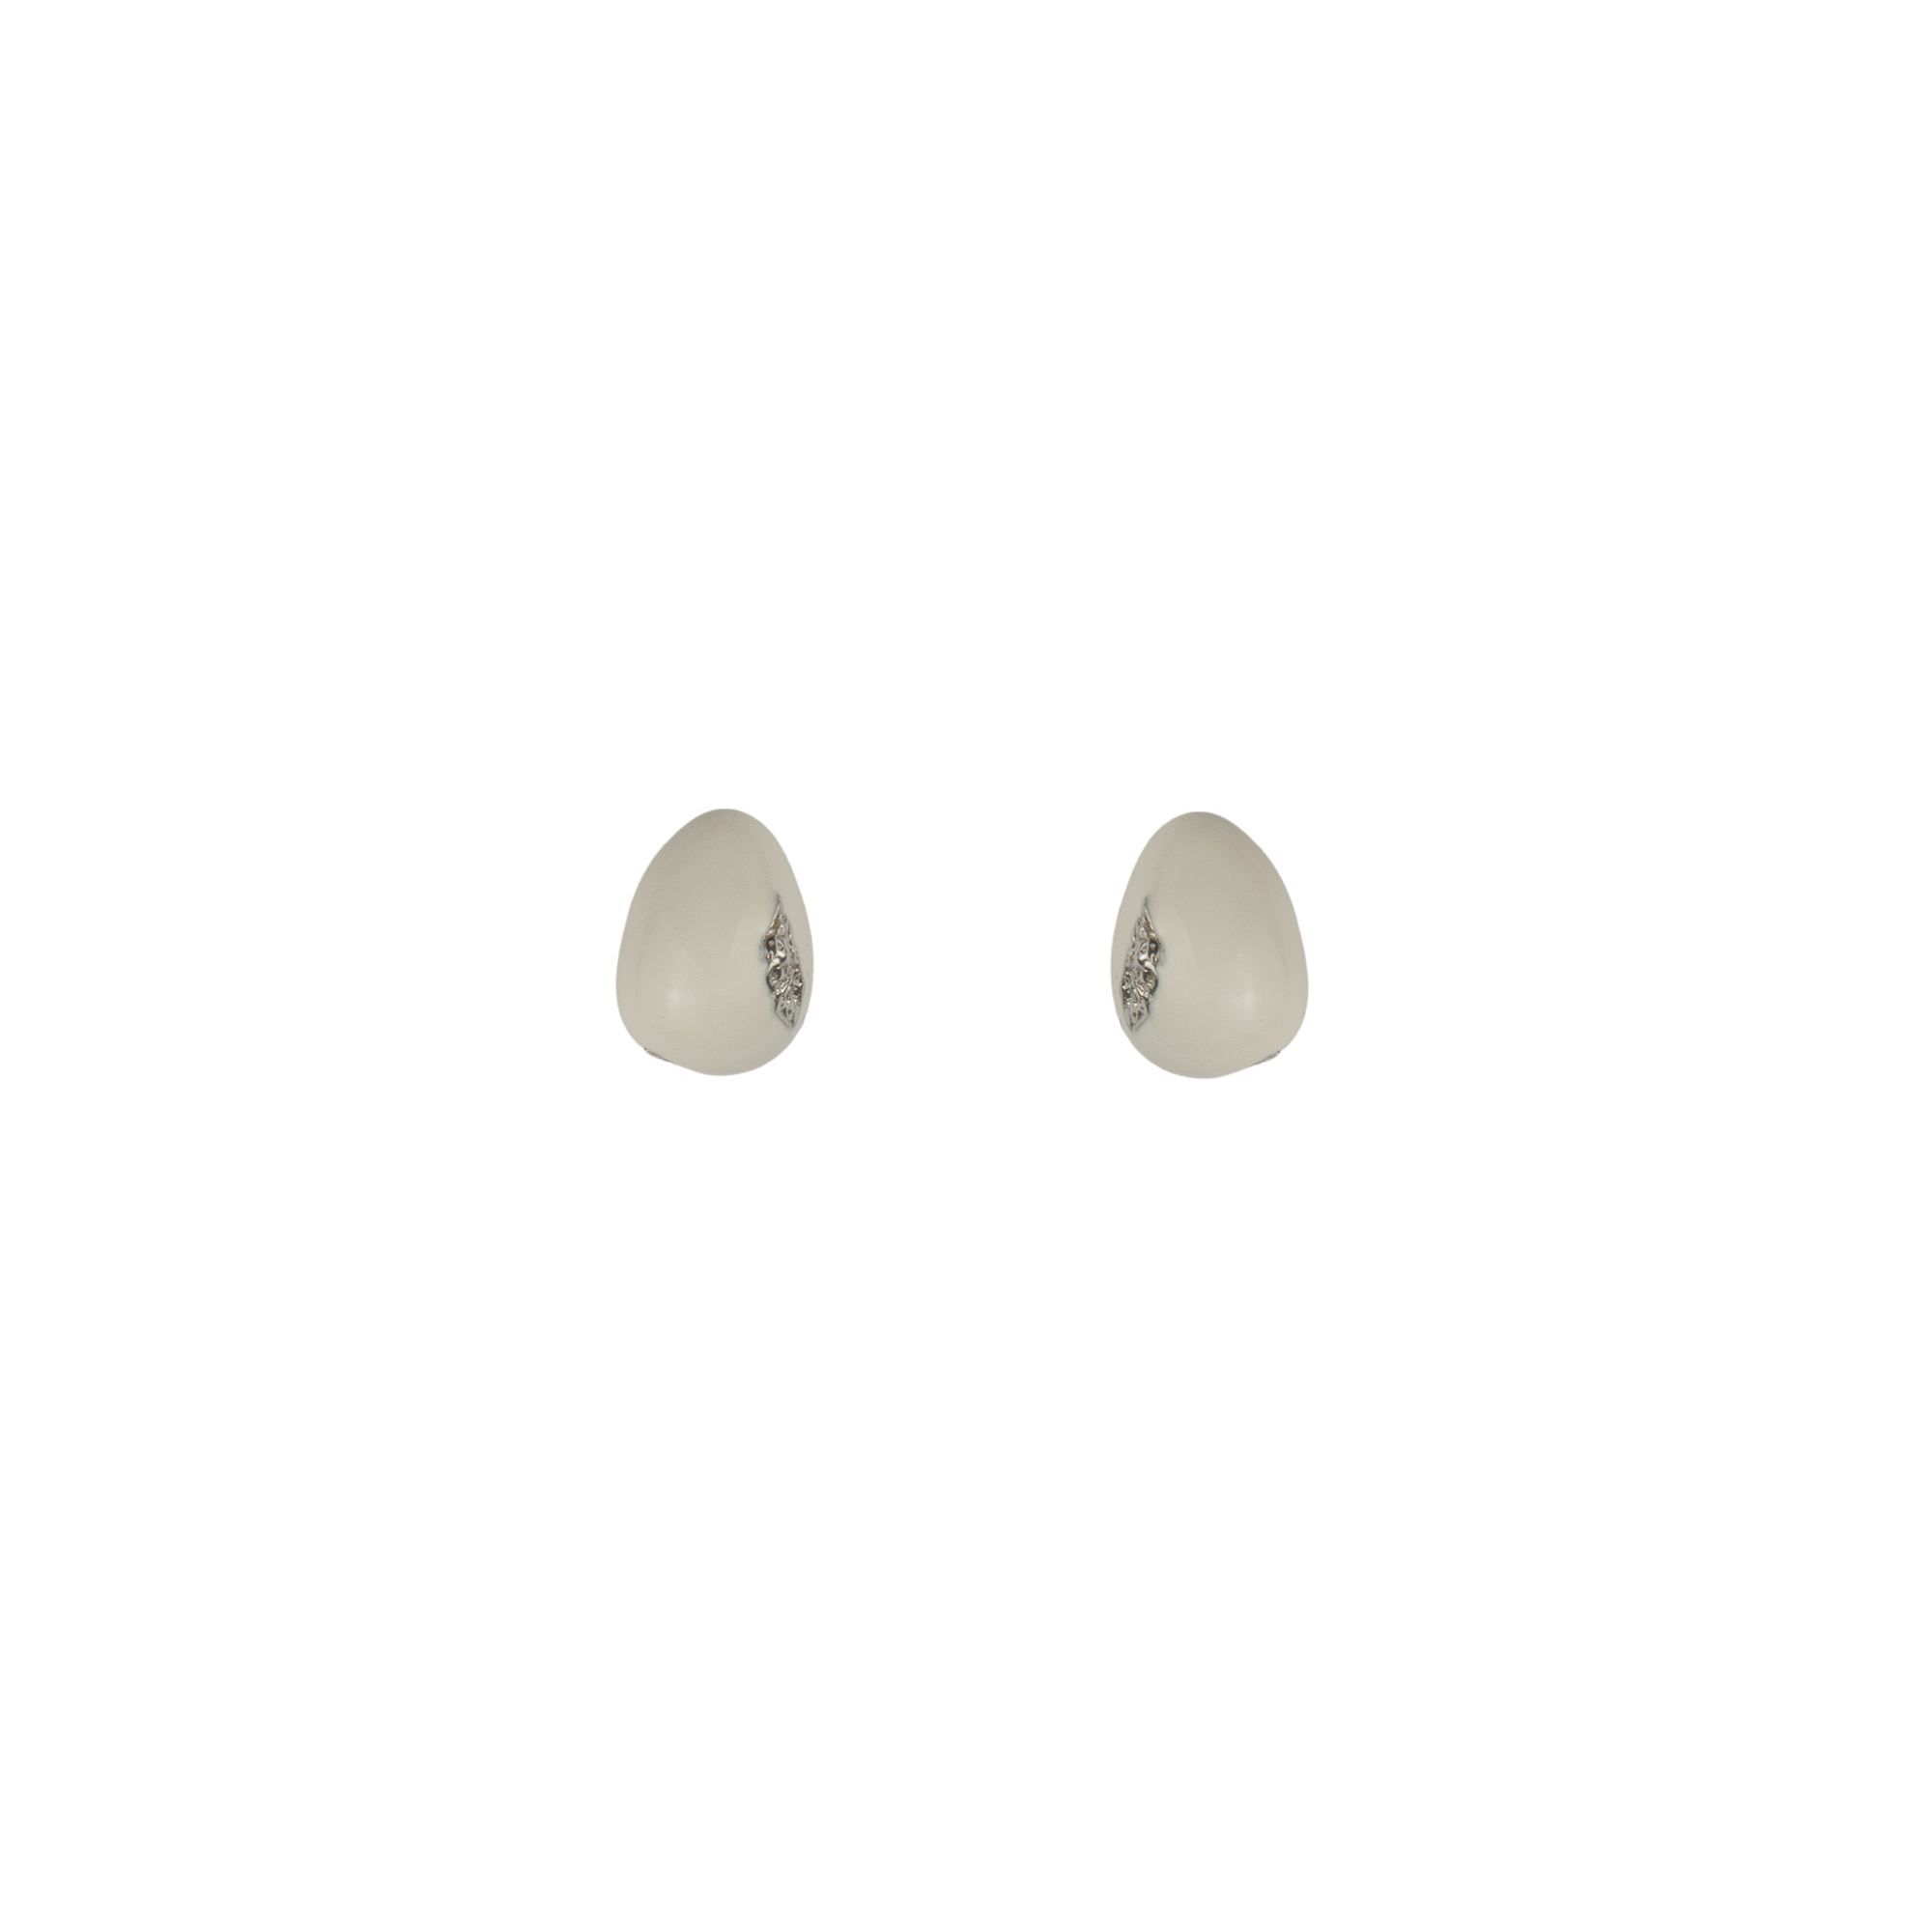 Hanying Small Oval Enamel Stud Earrings (White)